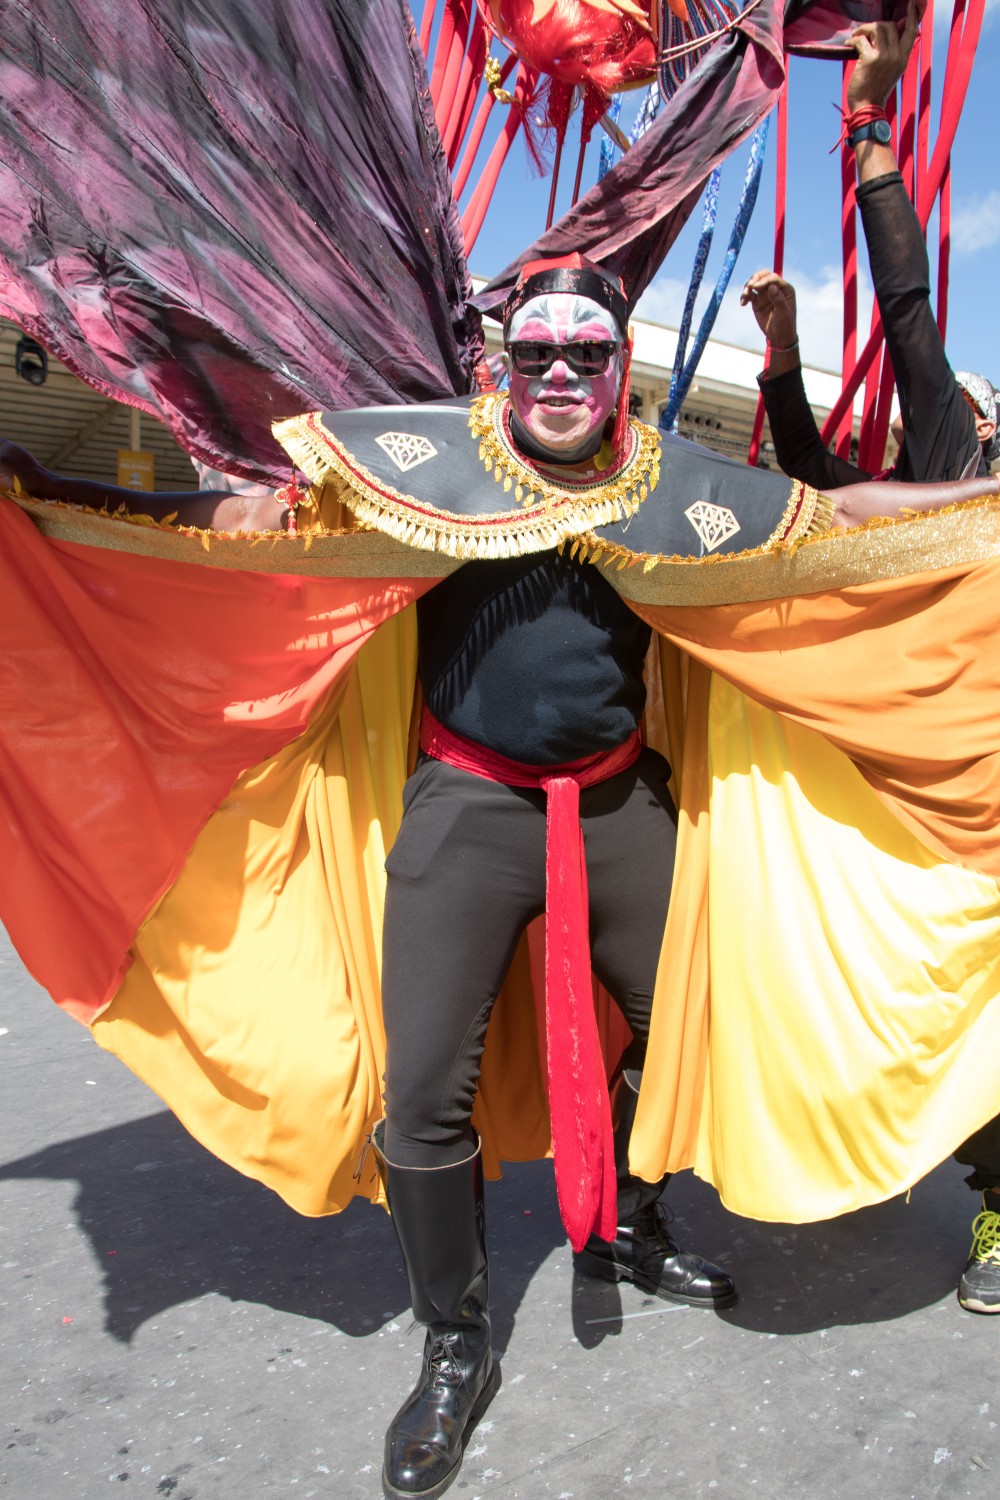 Ridicule of leaders, samba, skimpy garb at Brazil Carnival